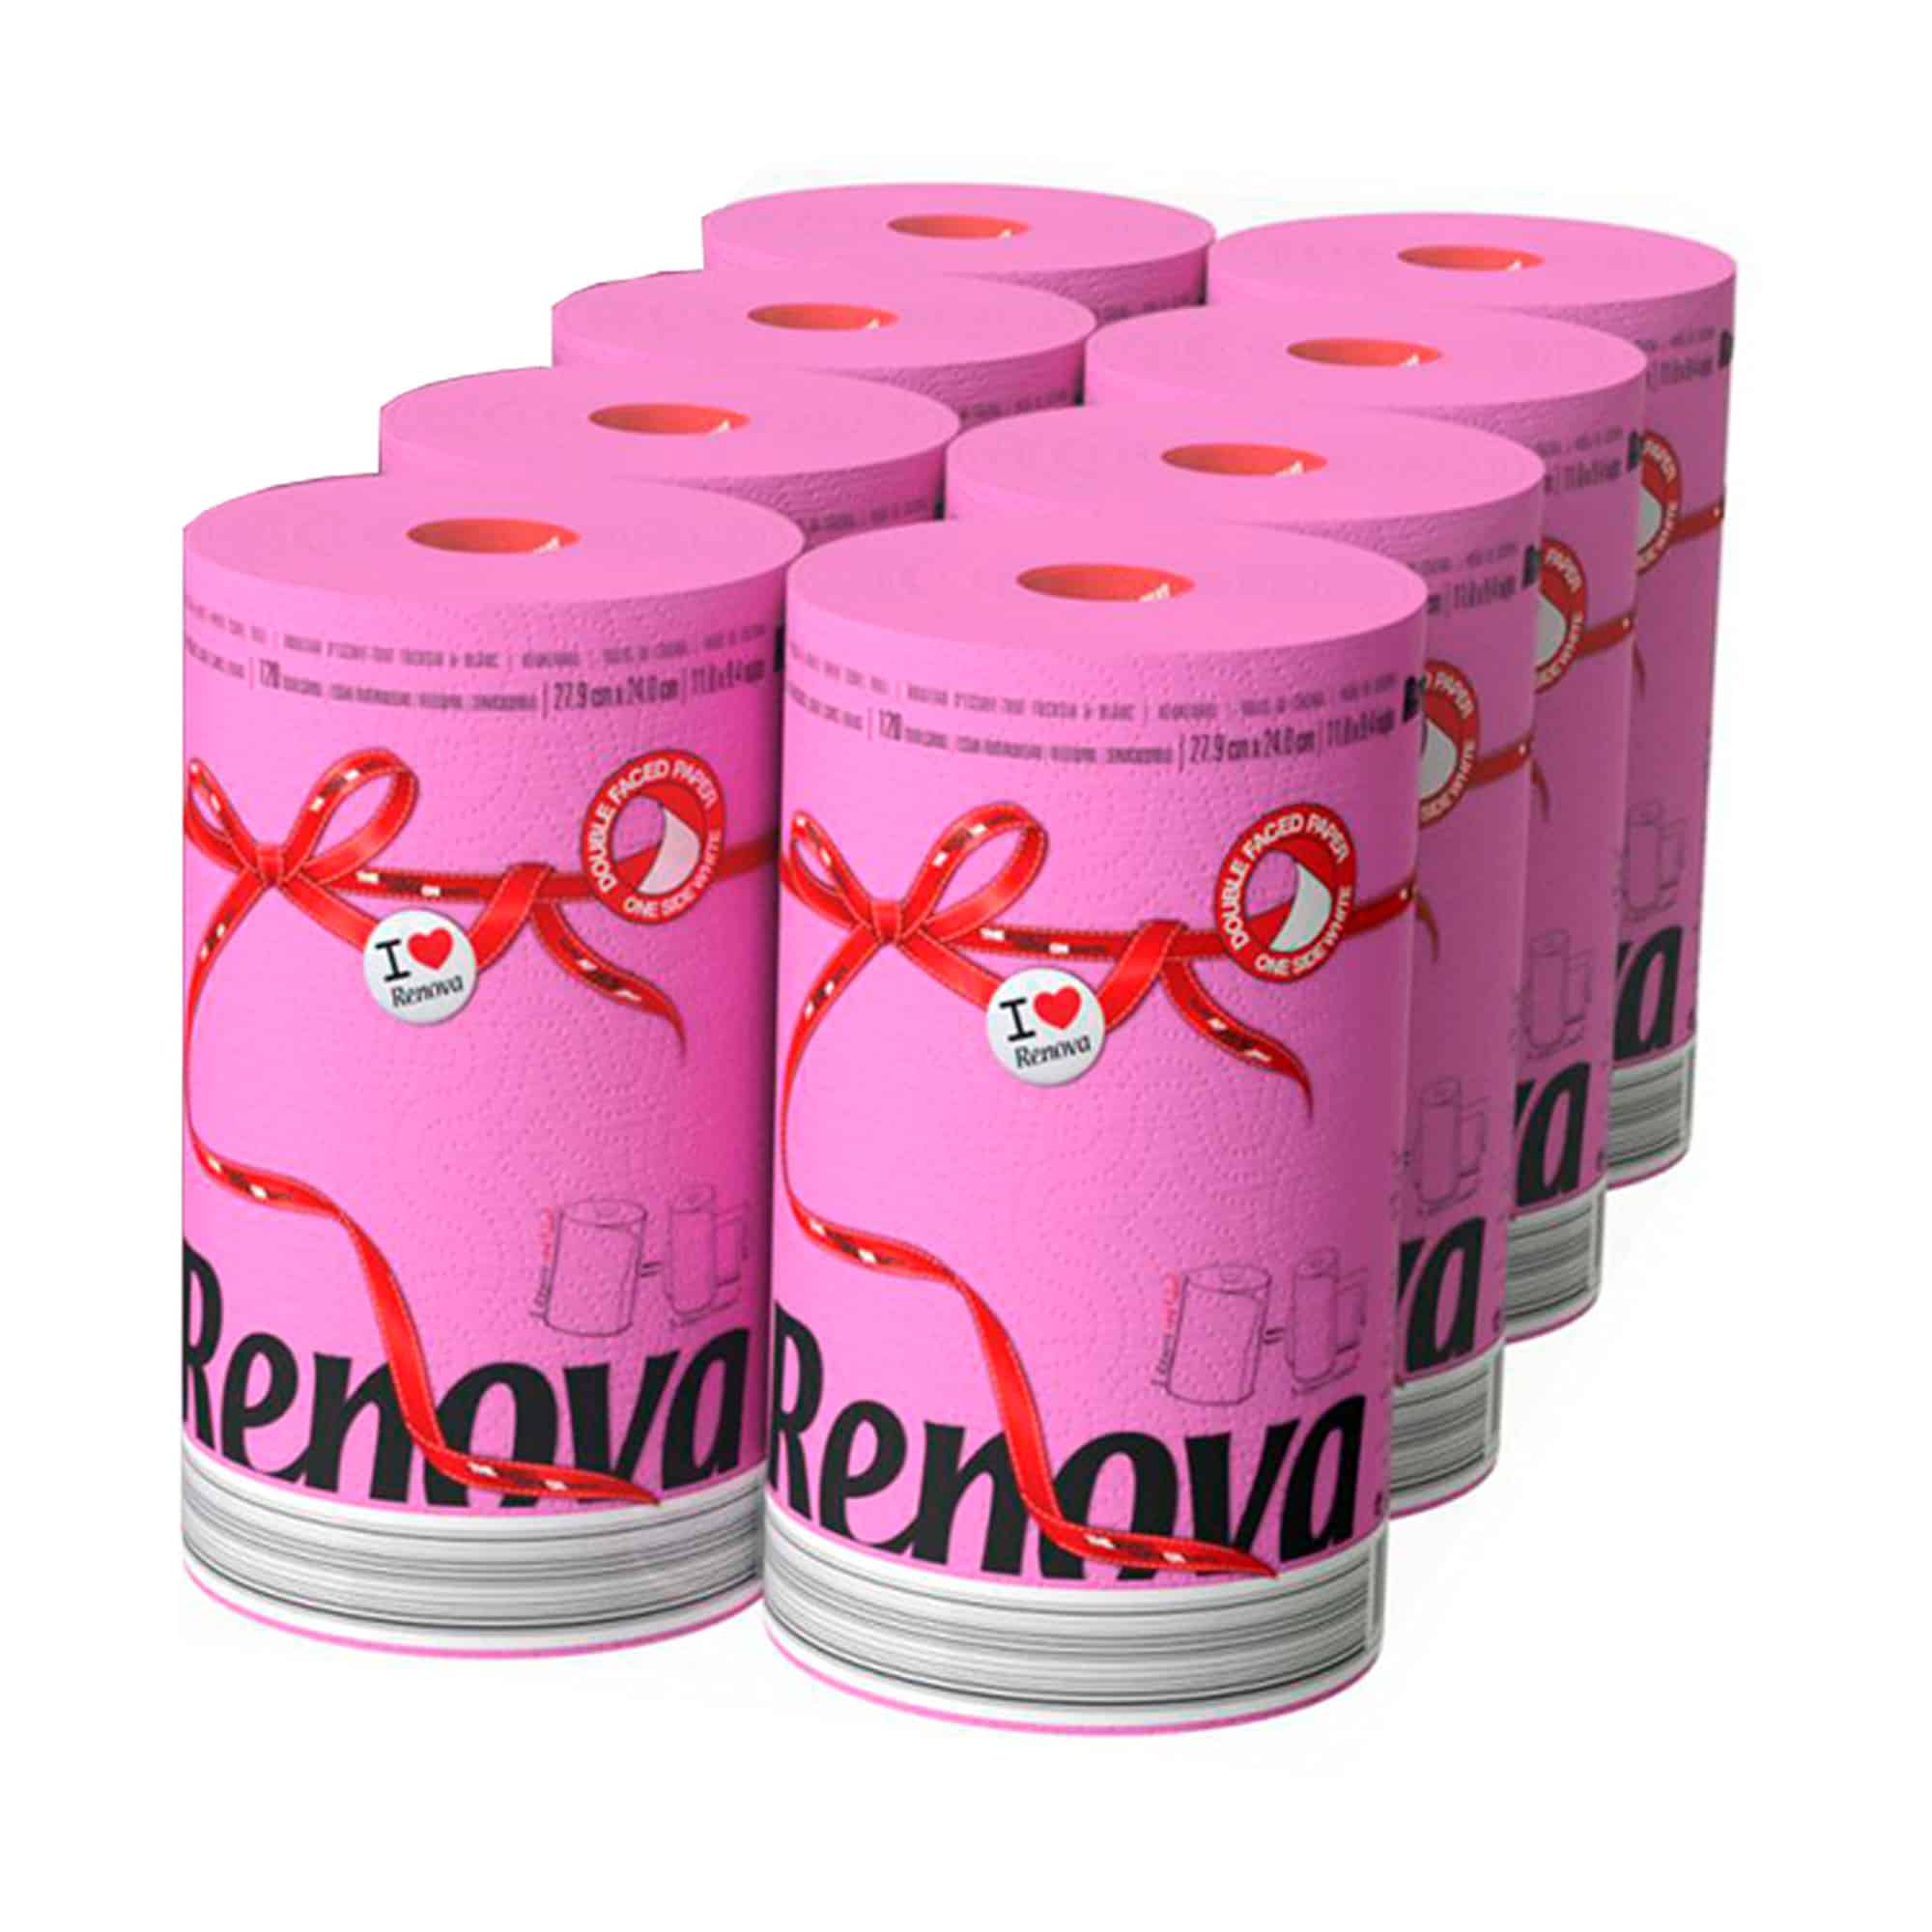  Renova 18 Pink Toilet Paper Jumbo Rolls- 3 Packs of 6